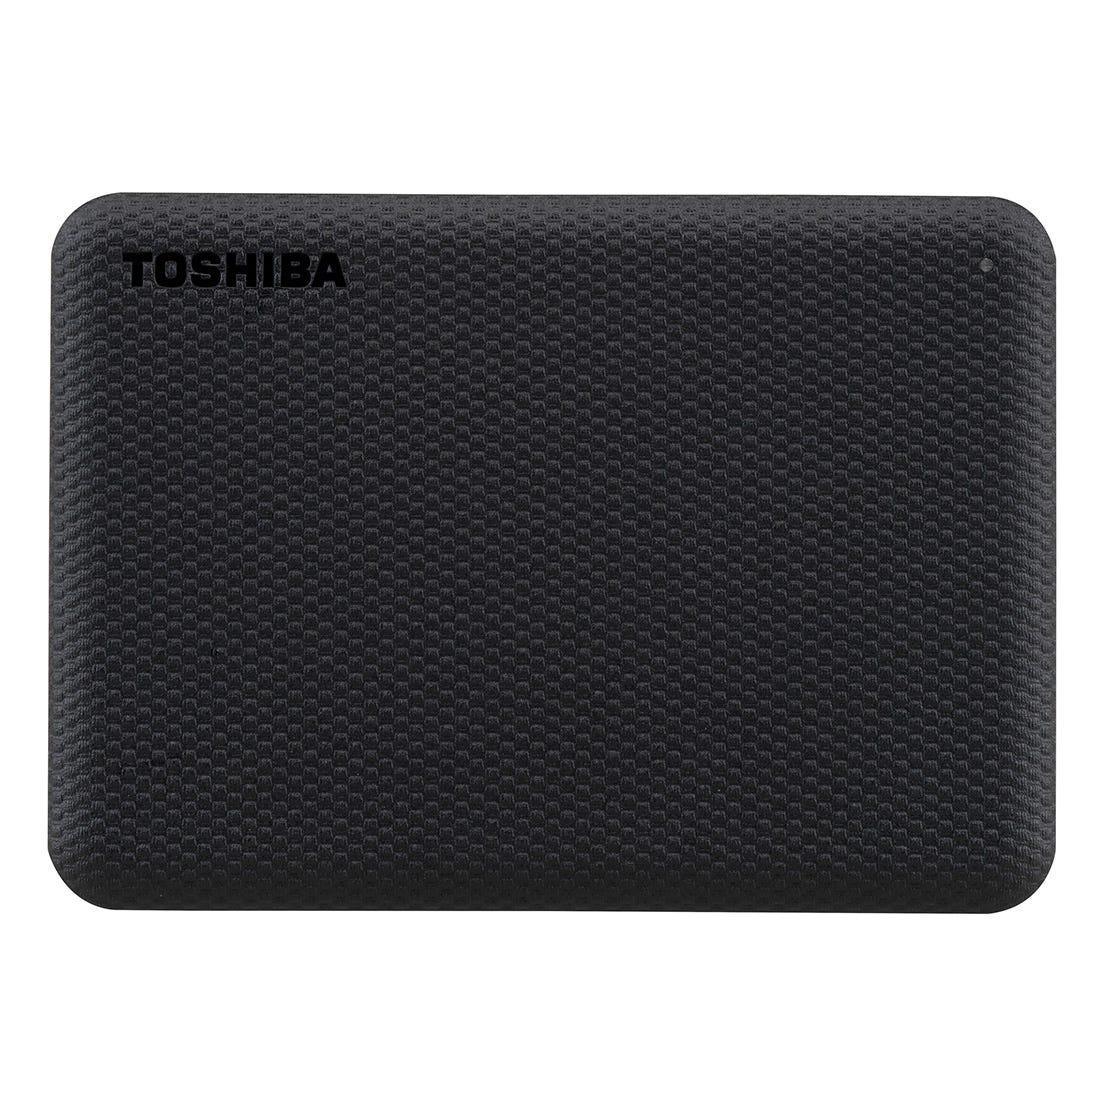 HD Externo Toshiba 2TB Canvio Advance Preto HDTCA20XK3AA I - Mega Market